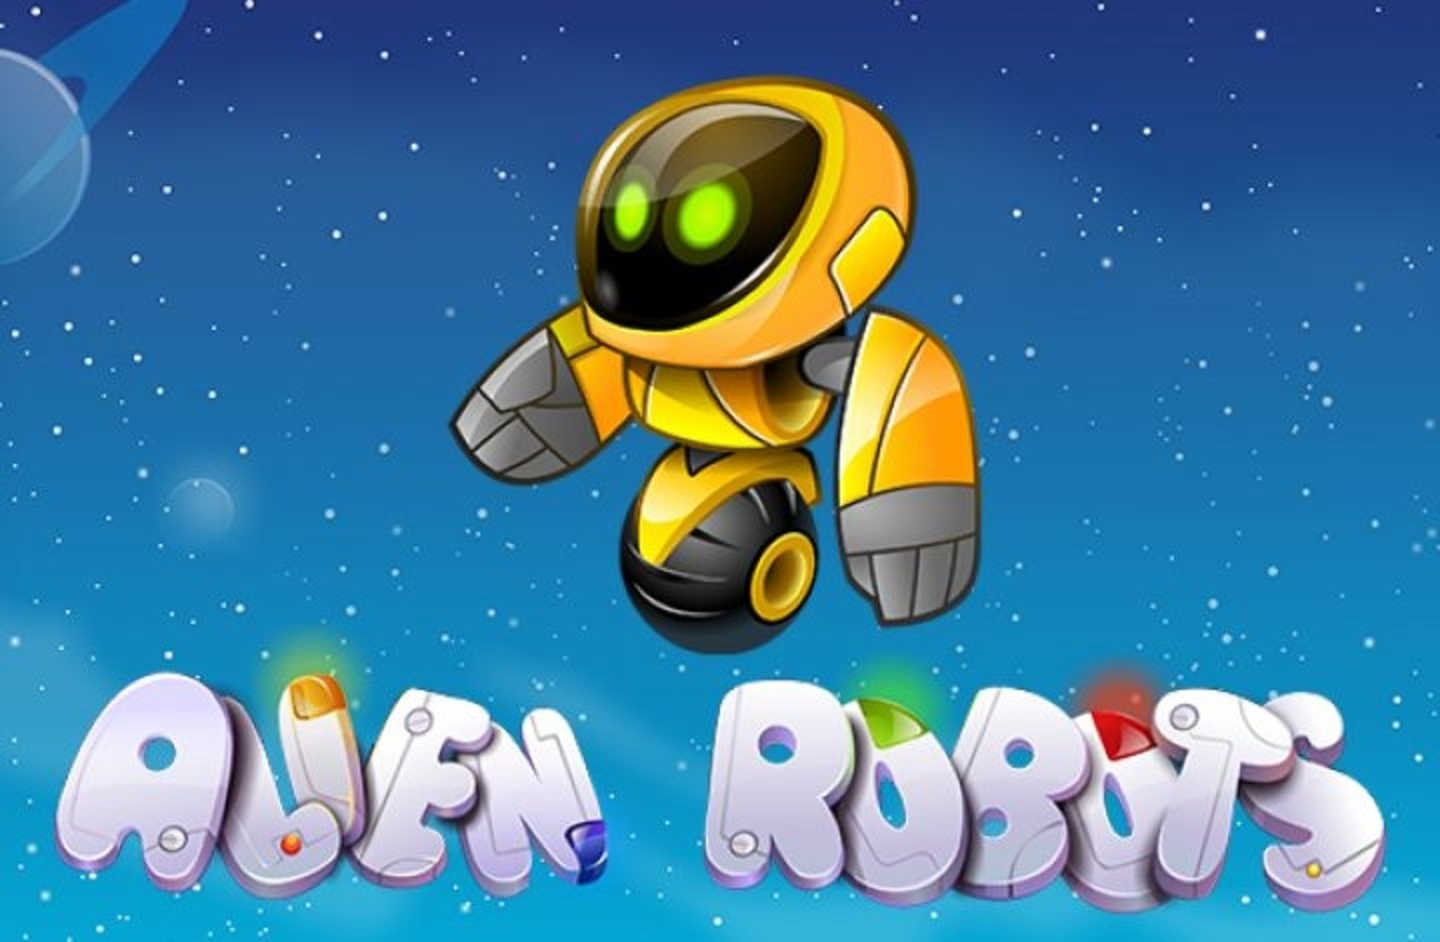 The Alien Robots Online Slot Demo Game by NetEnt